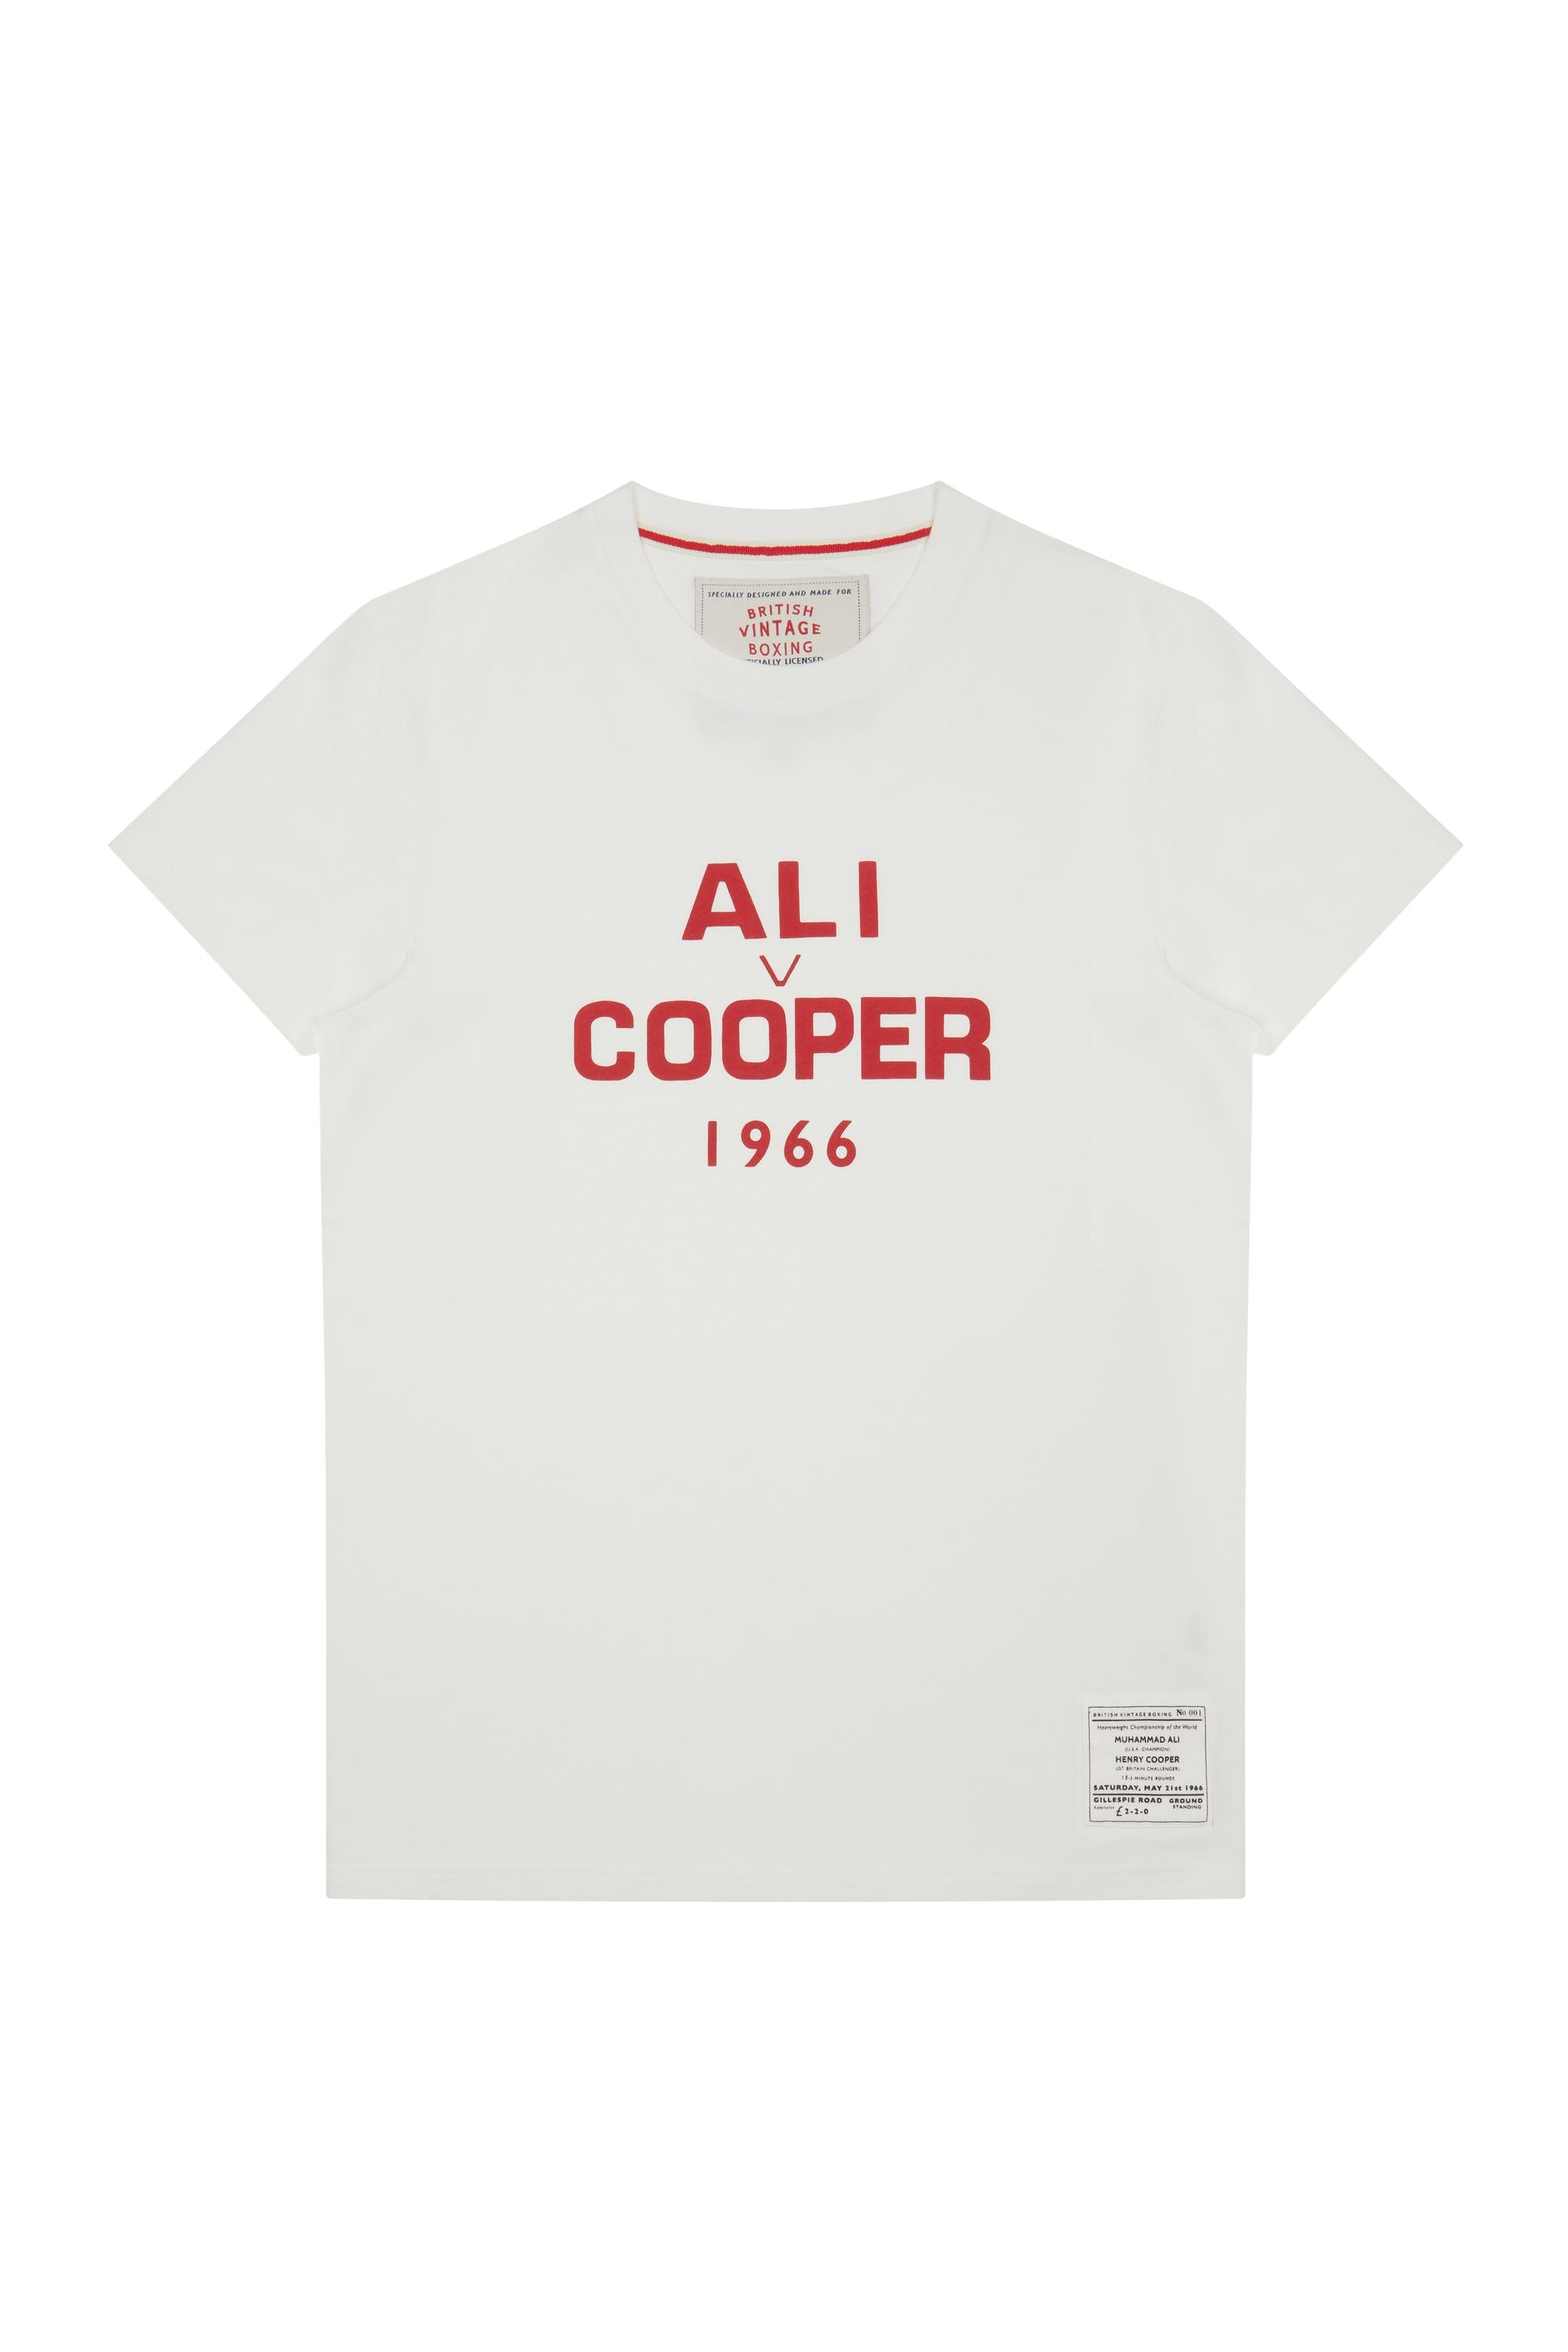 BROUGHTON ALI VS COOPER 1966 T-SHIRT